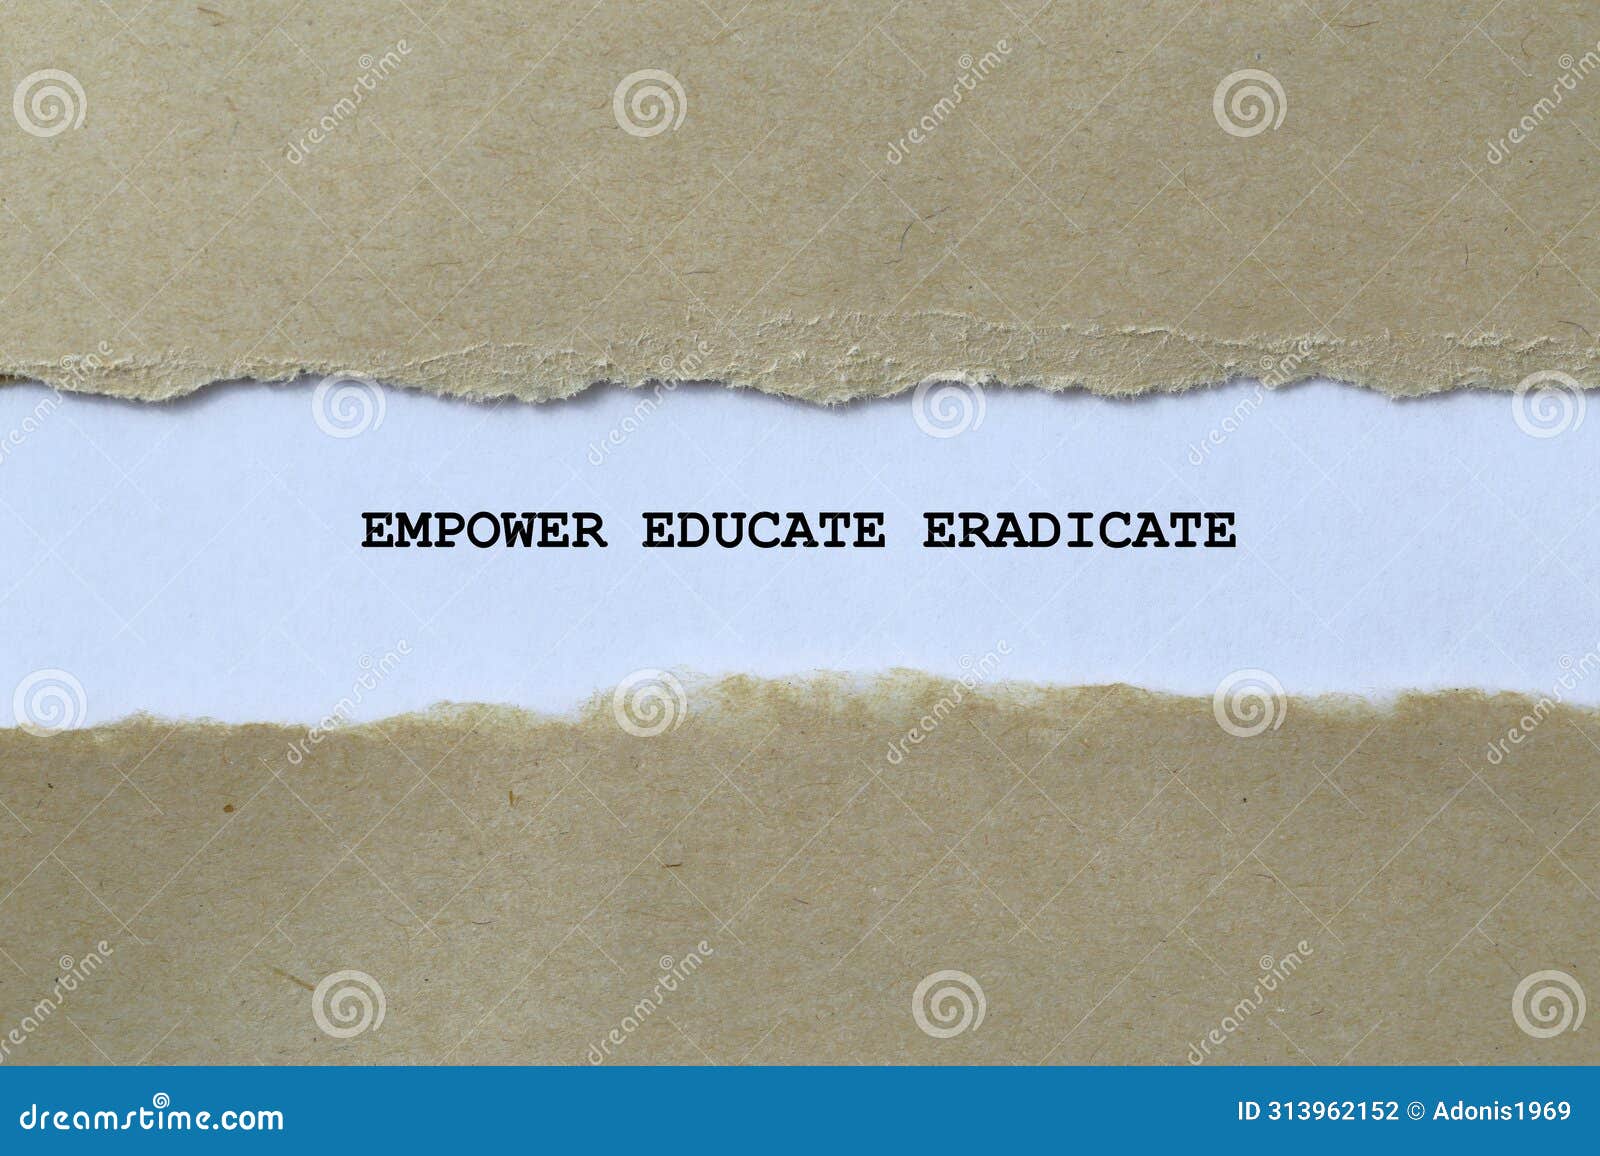 empower educate eradicate on white paper